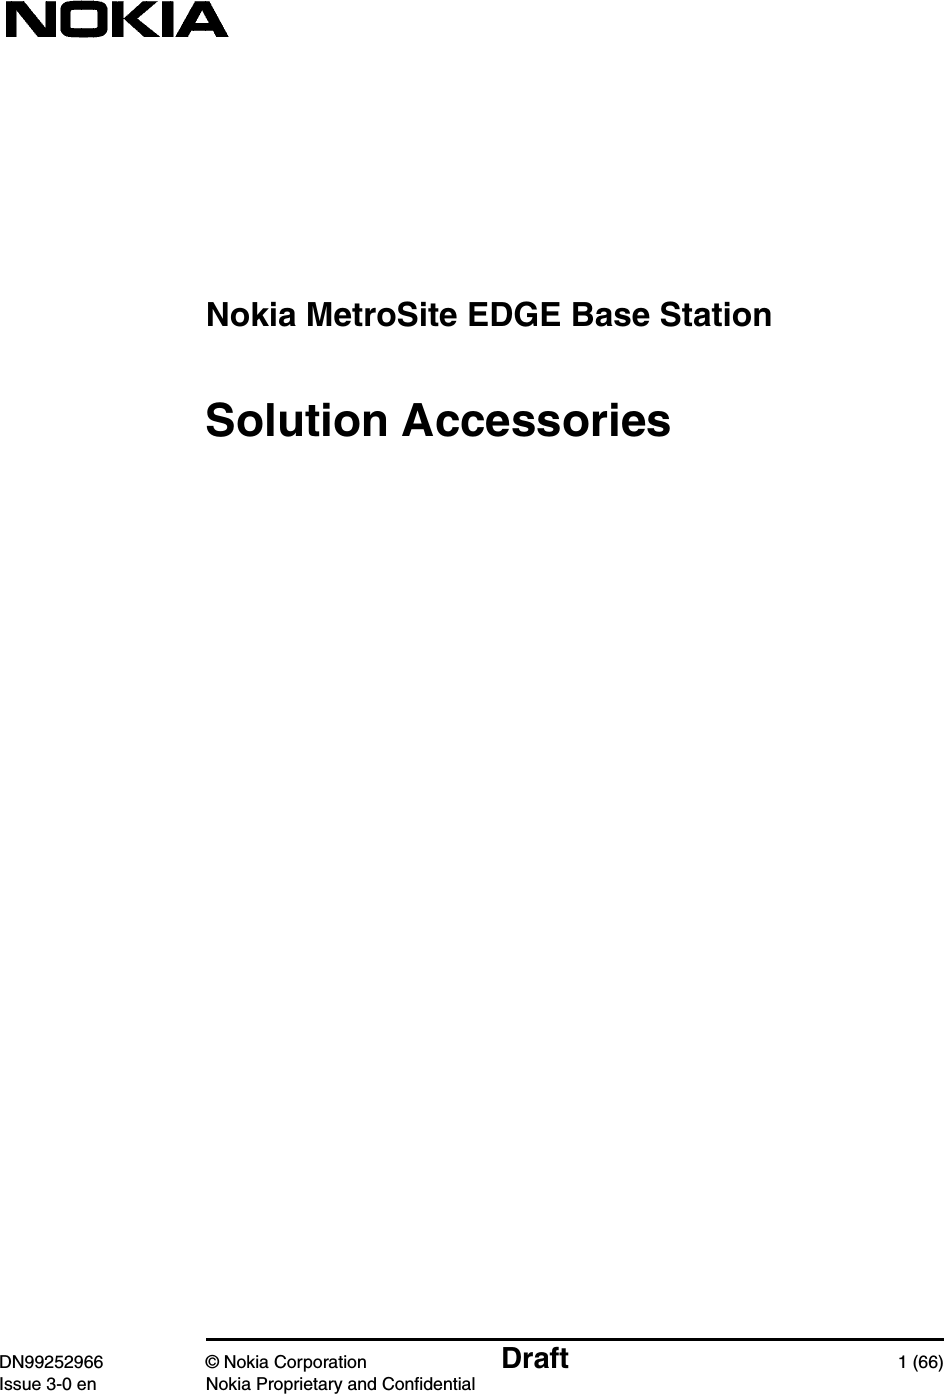 Nokia MetroSite EDGE Base StationDN99252966 © Nokia Corporation Draft 1 (66)Issue 3-0 en Nokia Proprietary and ConfidentialSolution Accessories